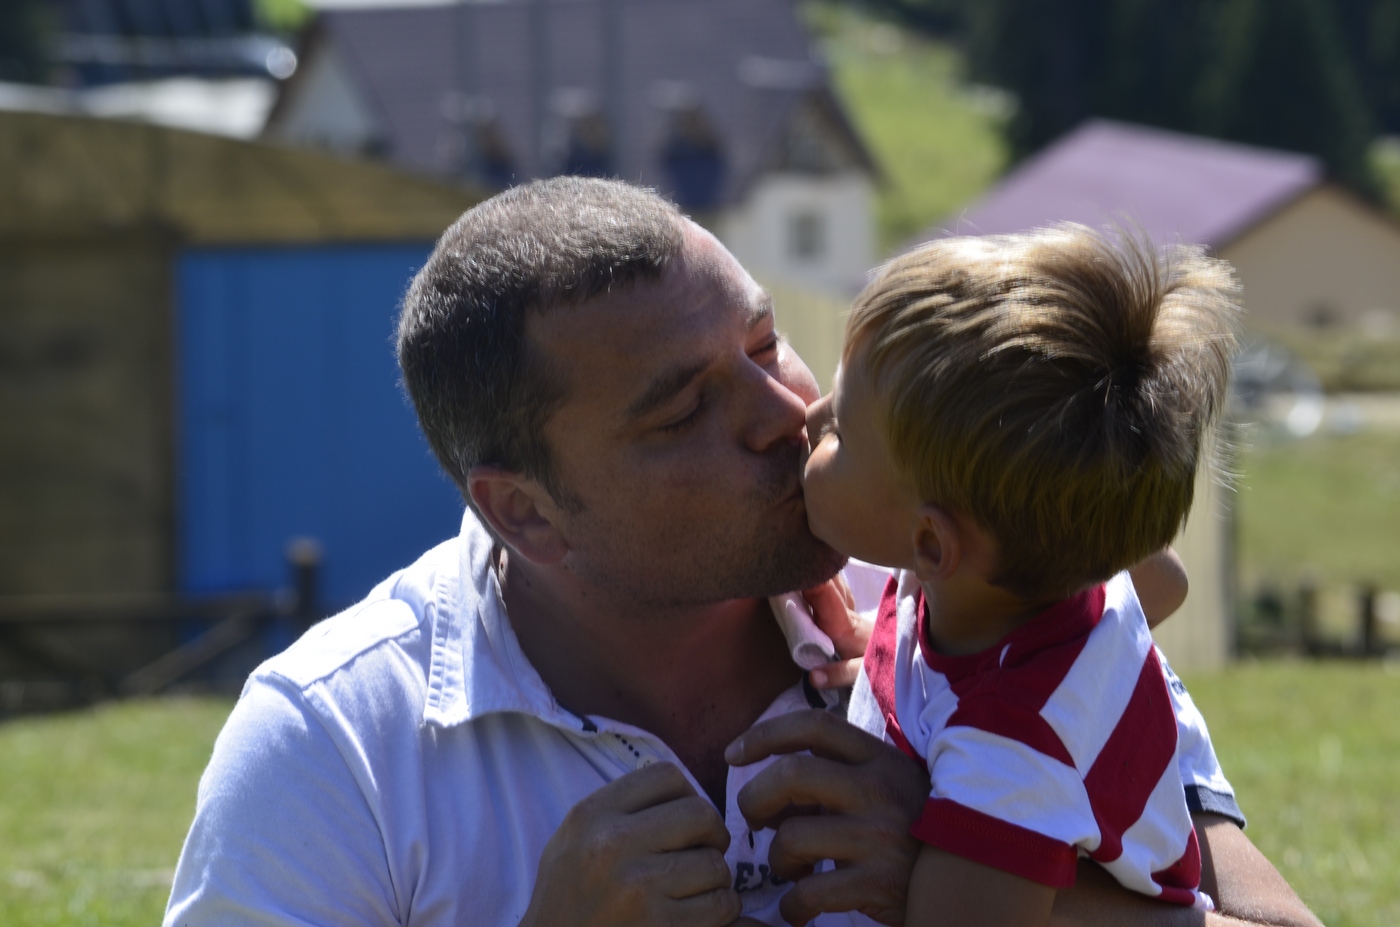 Daughter sucks dick. Отец целует сына. Мальчик целует папу. Ребенок целует папу в губы. Отец целует сына в губы.